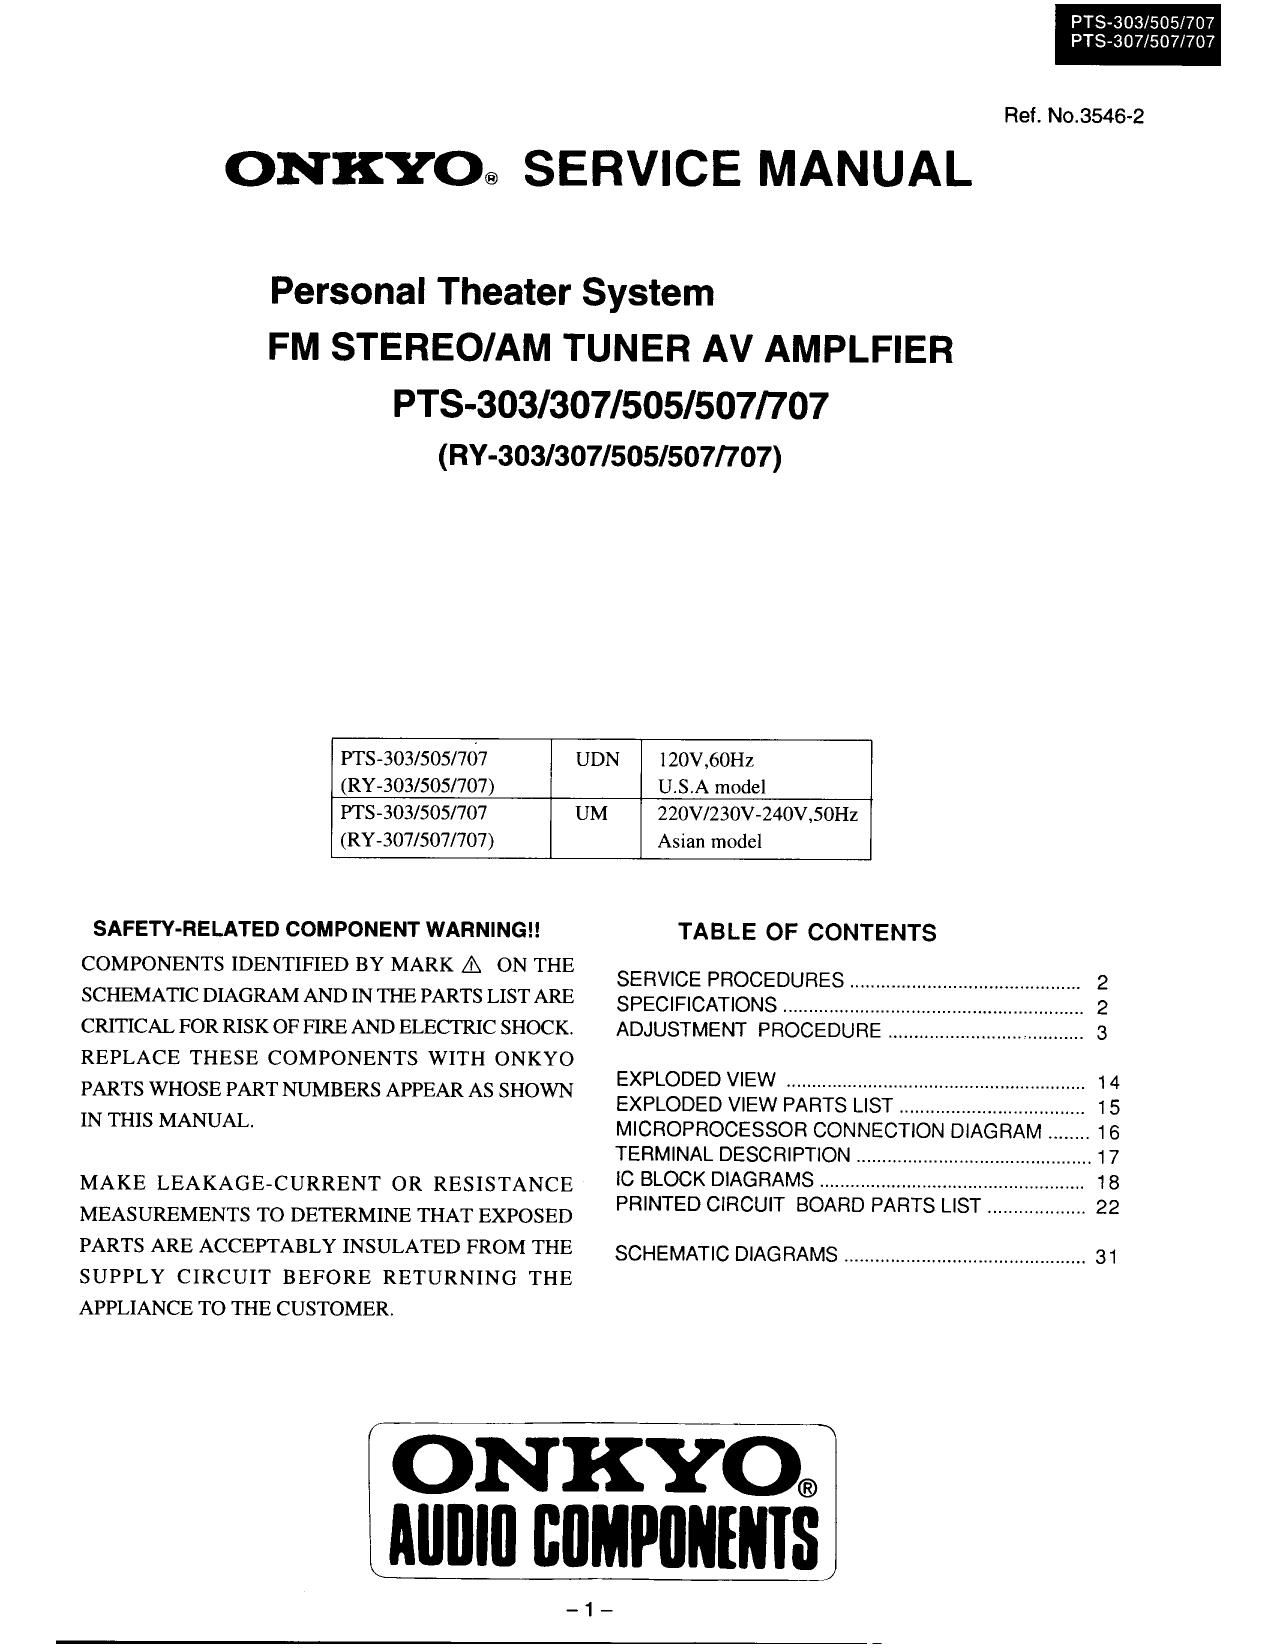 Onkyo PTS 303 Service Manual